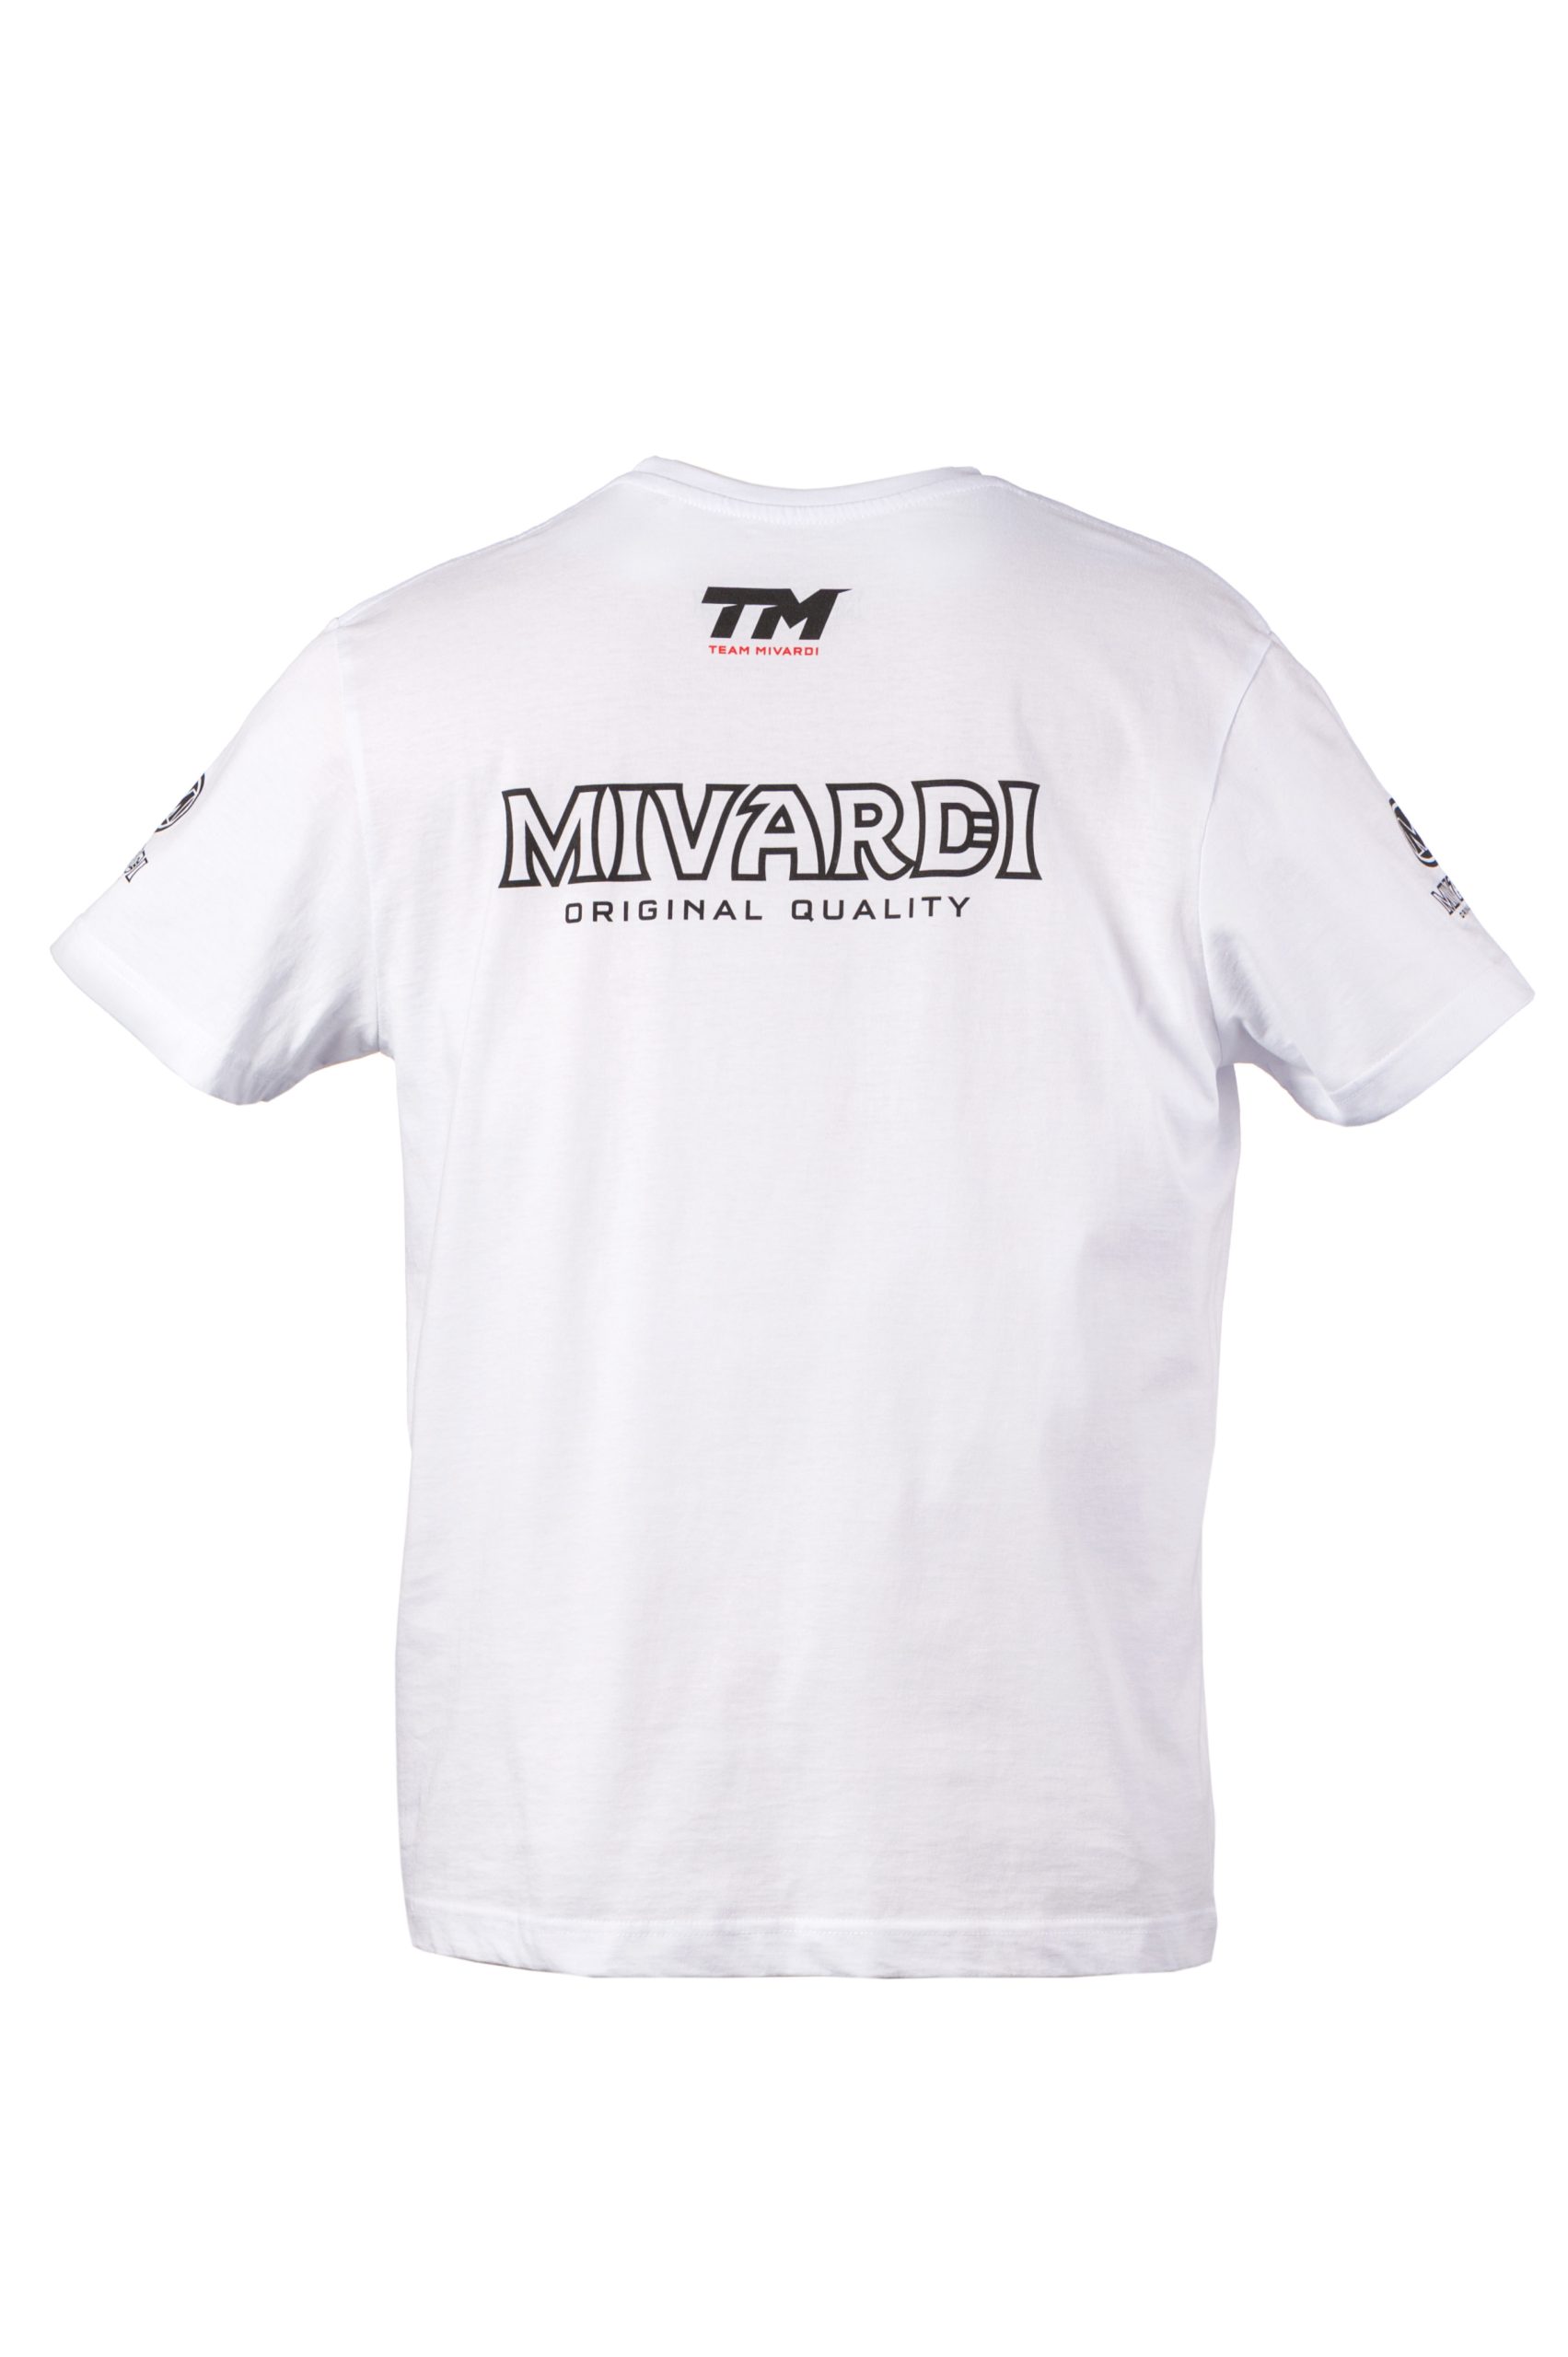 Mivardi T-shirt TM white – 3XL M-TMTSW3XL